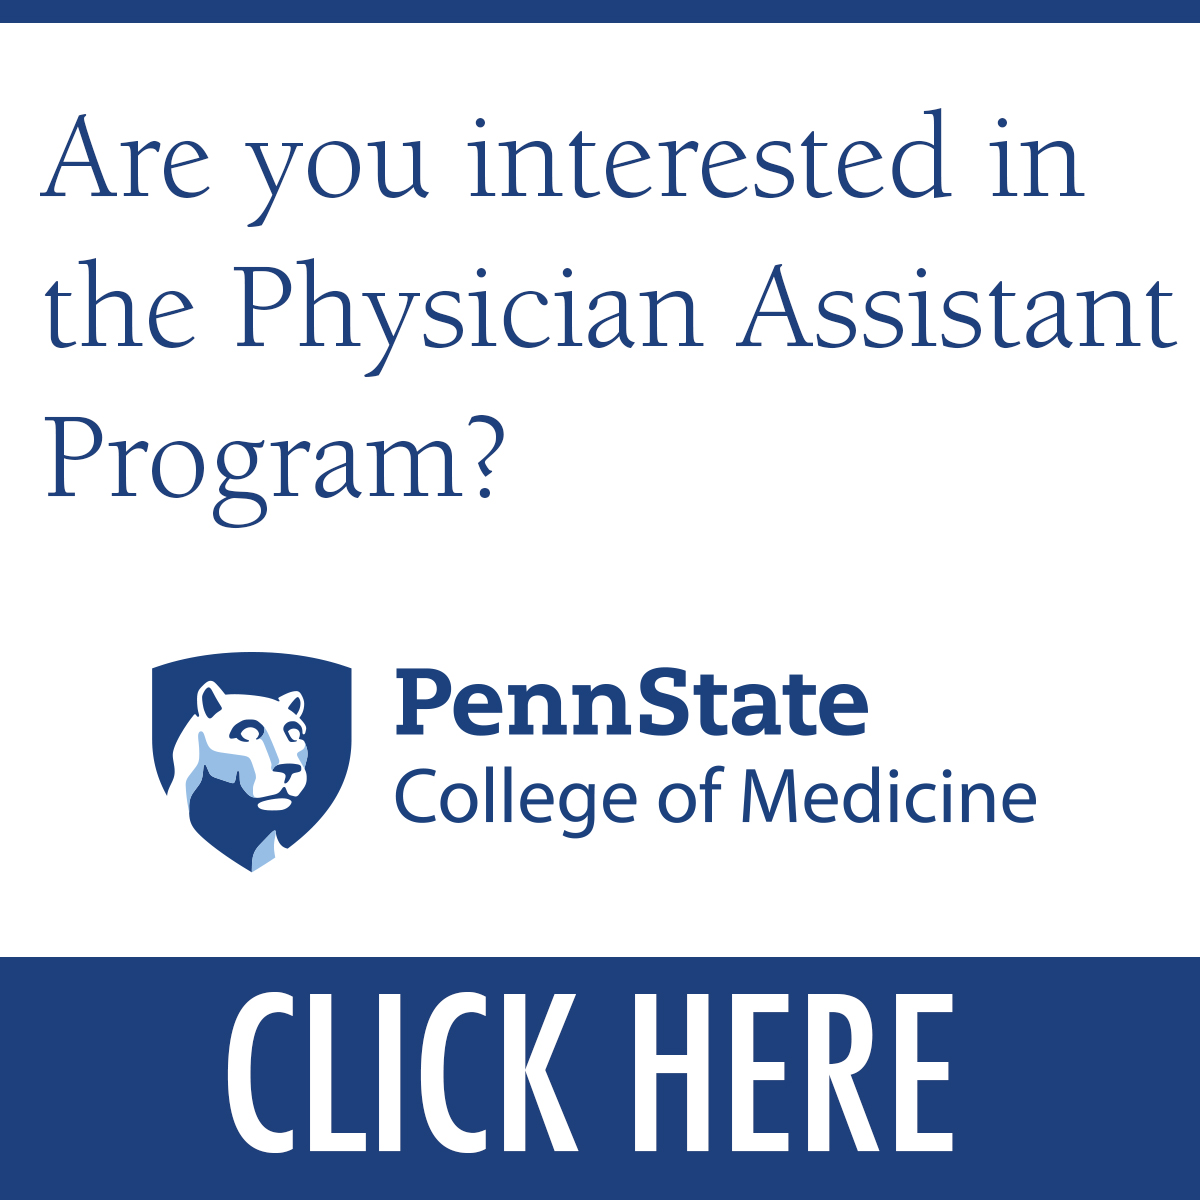 http://www.pennstatehershey.org/web/educationalaffairs/home/programs/physician-assistant-program